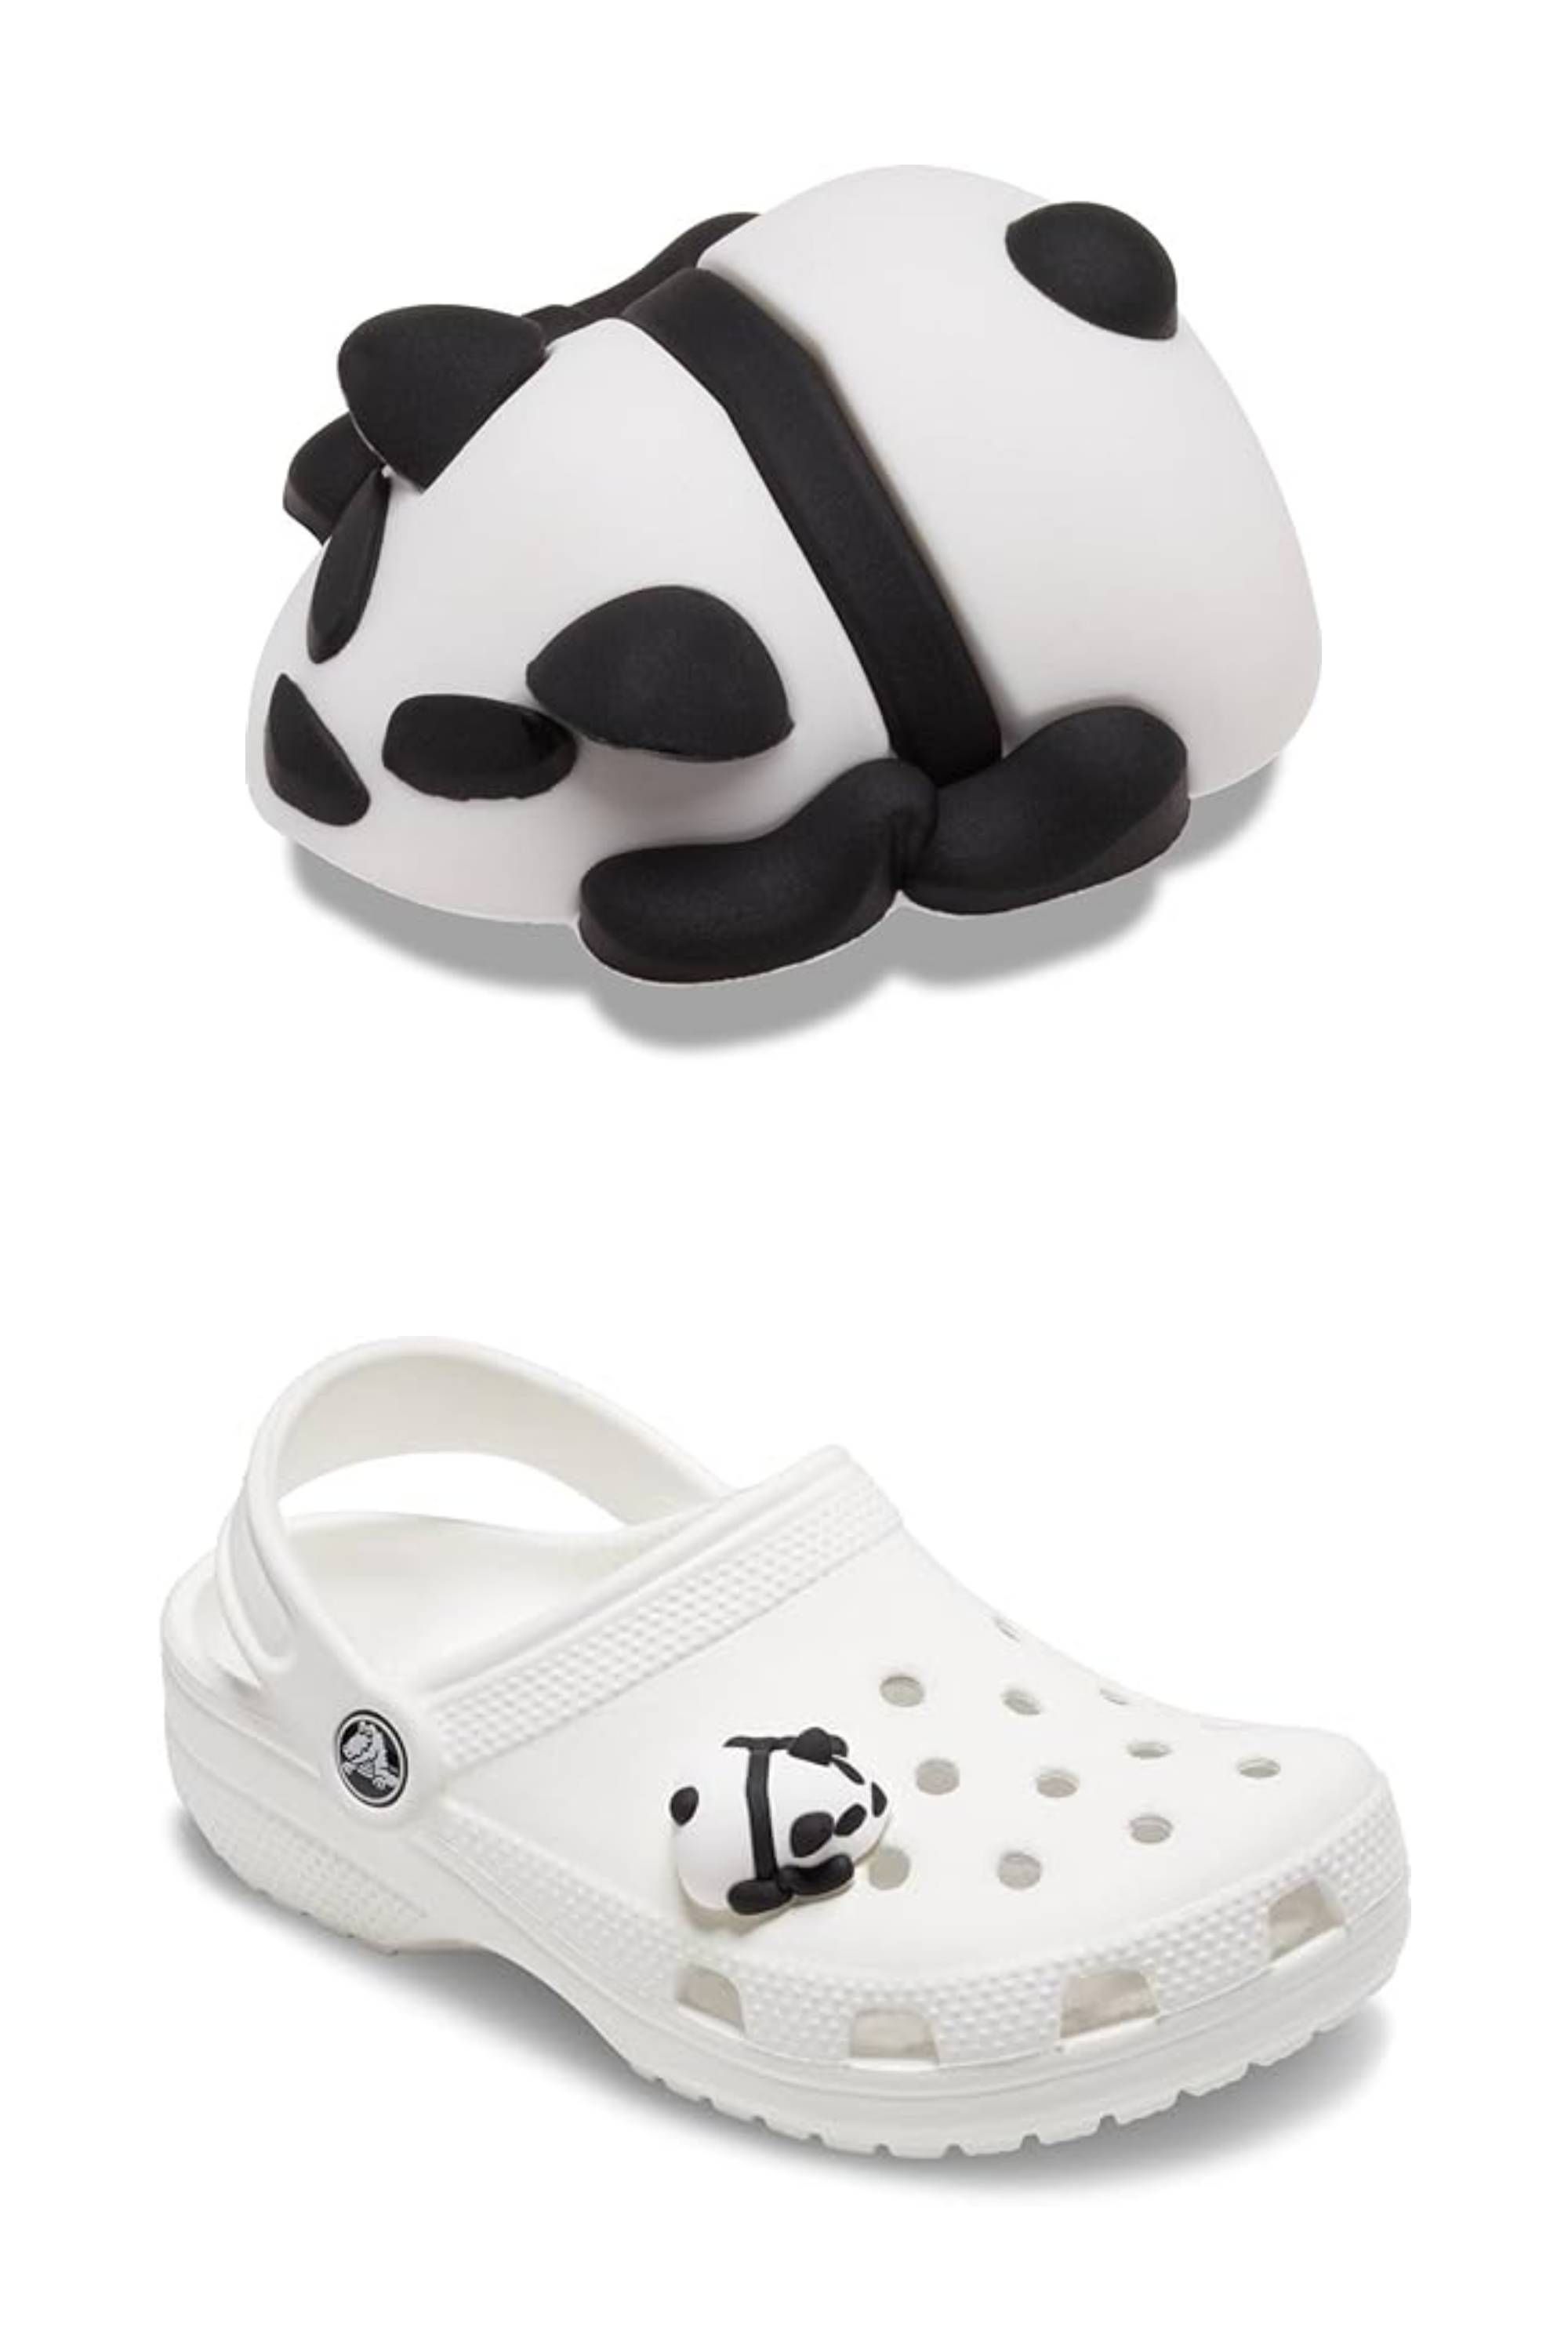 Crocs Jibbitz Shoe Charms - 3D Panda Single